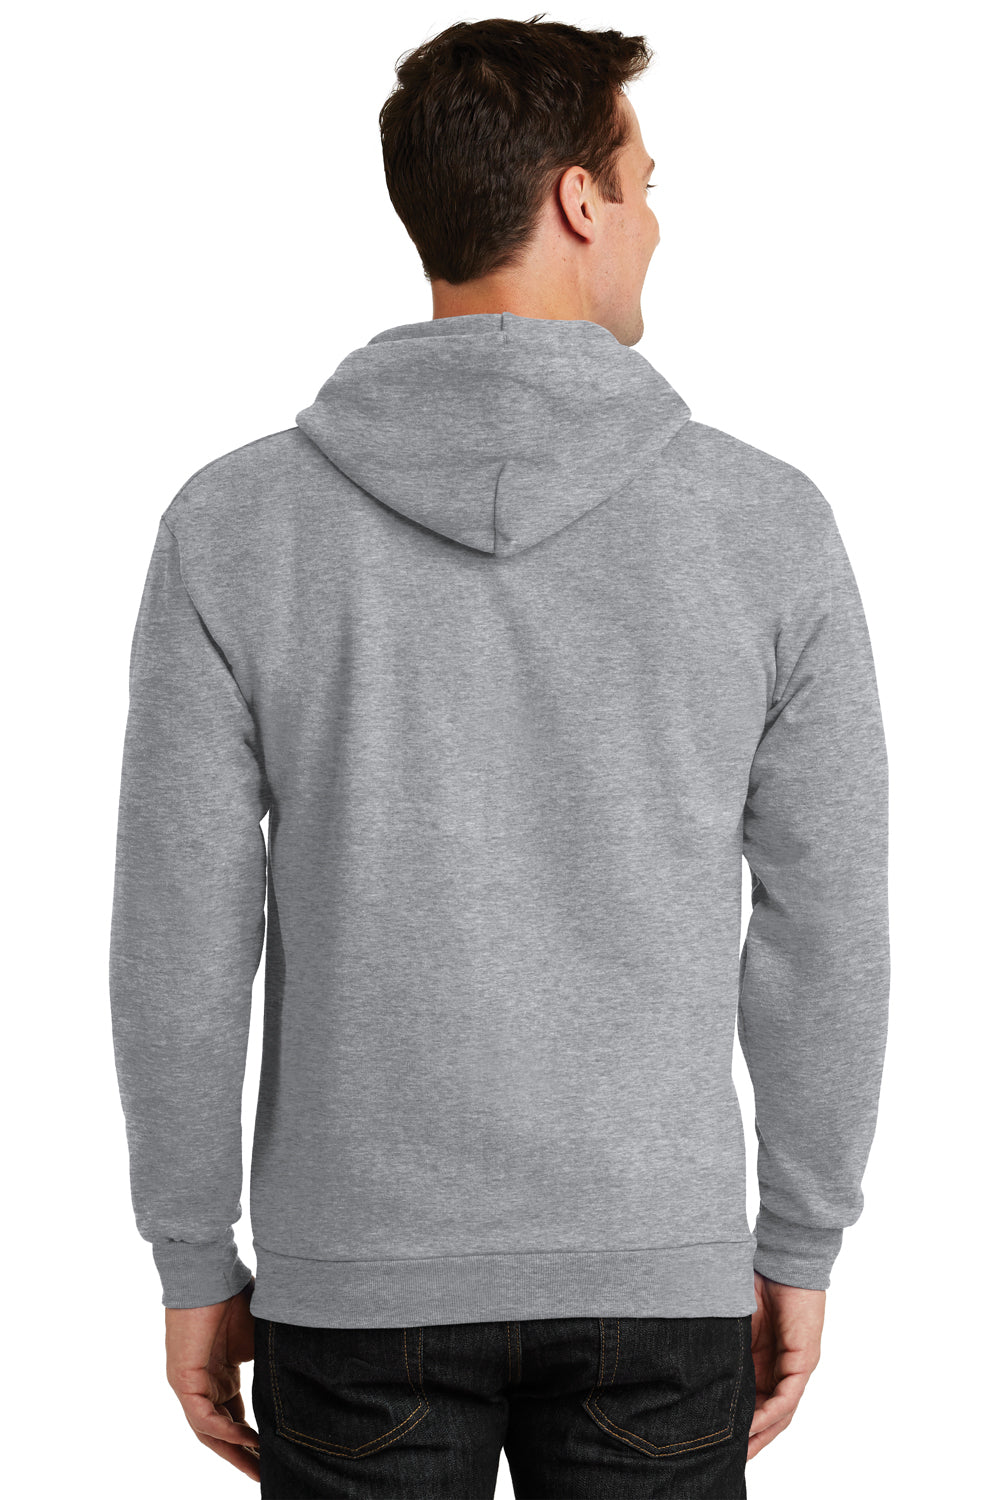 Port & Company PC90ZH Mens Essential Fleece Full Zip Hooded Sweatshirt Hoodie Heather Grey Back